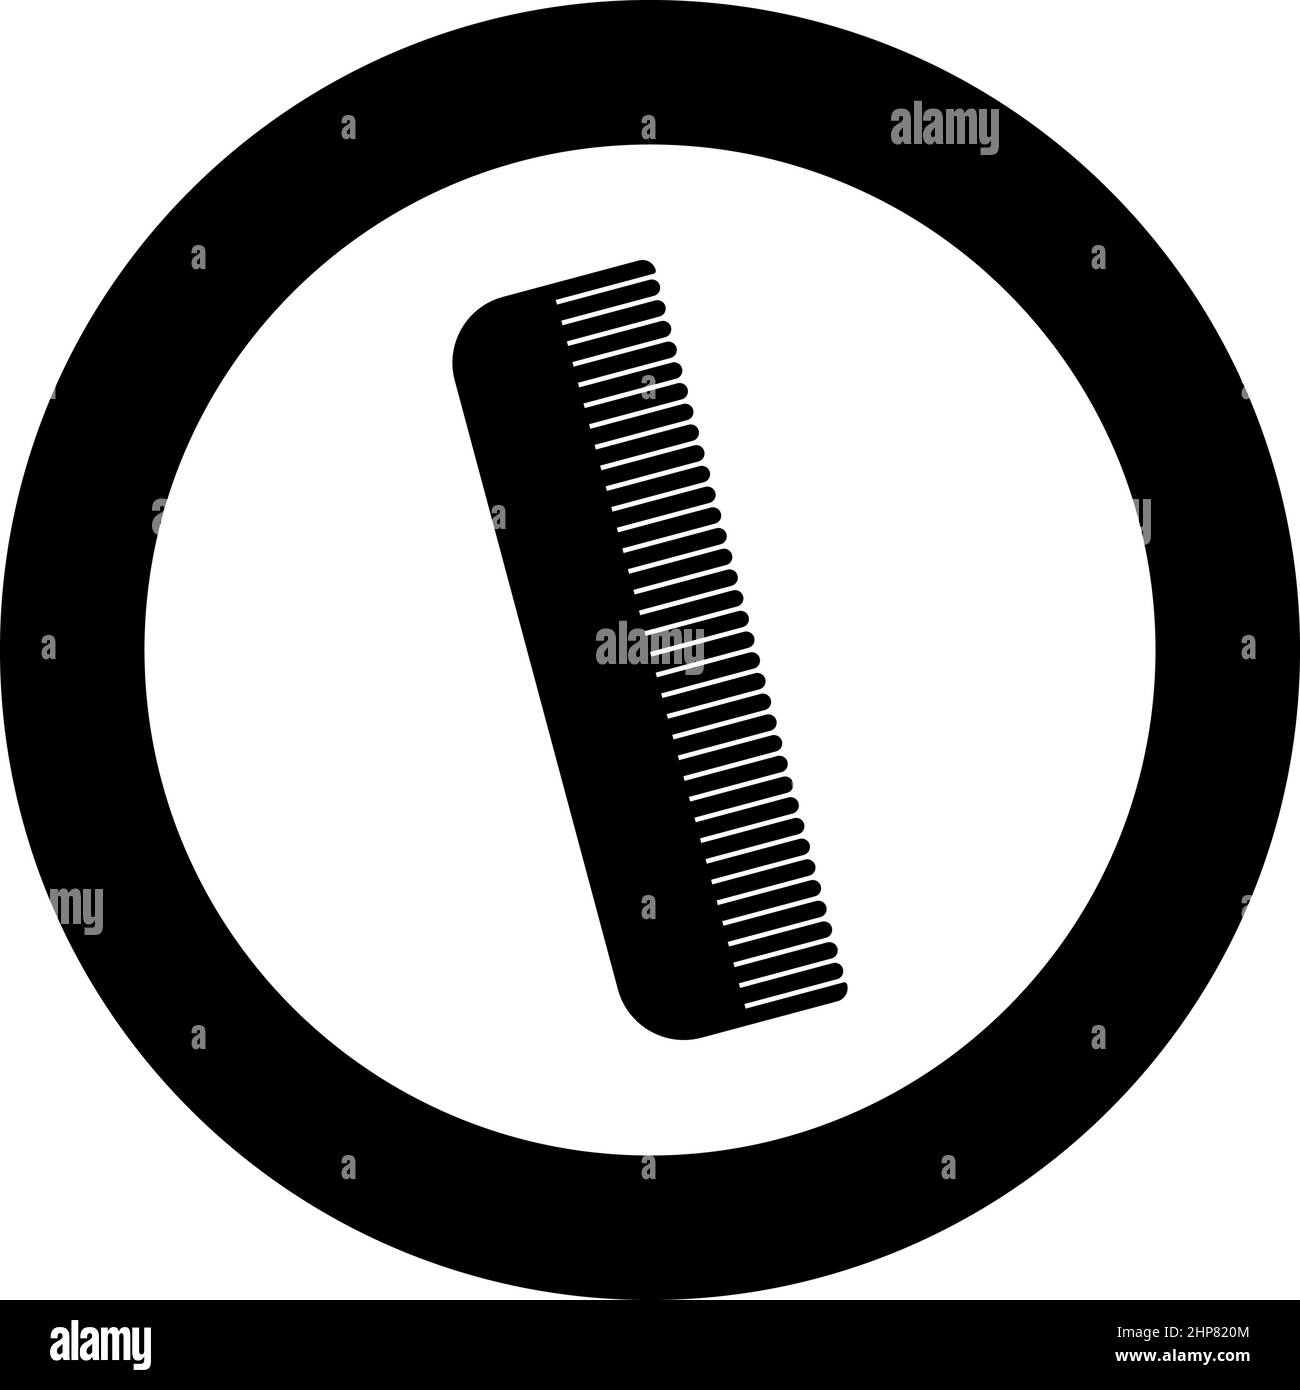 Kamm-Symbol im Kreis rund schwarz Farbe Vektor Illustration Bild durchgezogene Umrisse Stil Stock Vektor